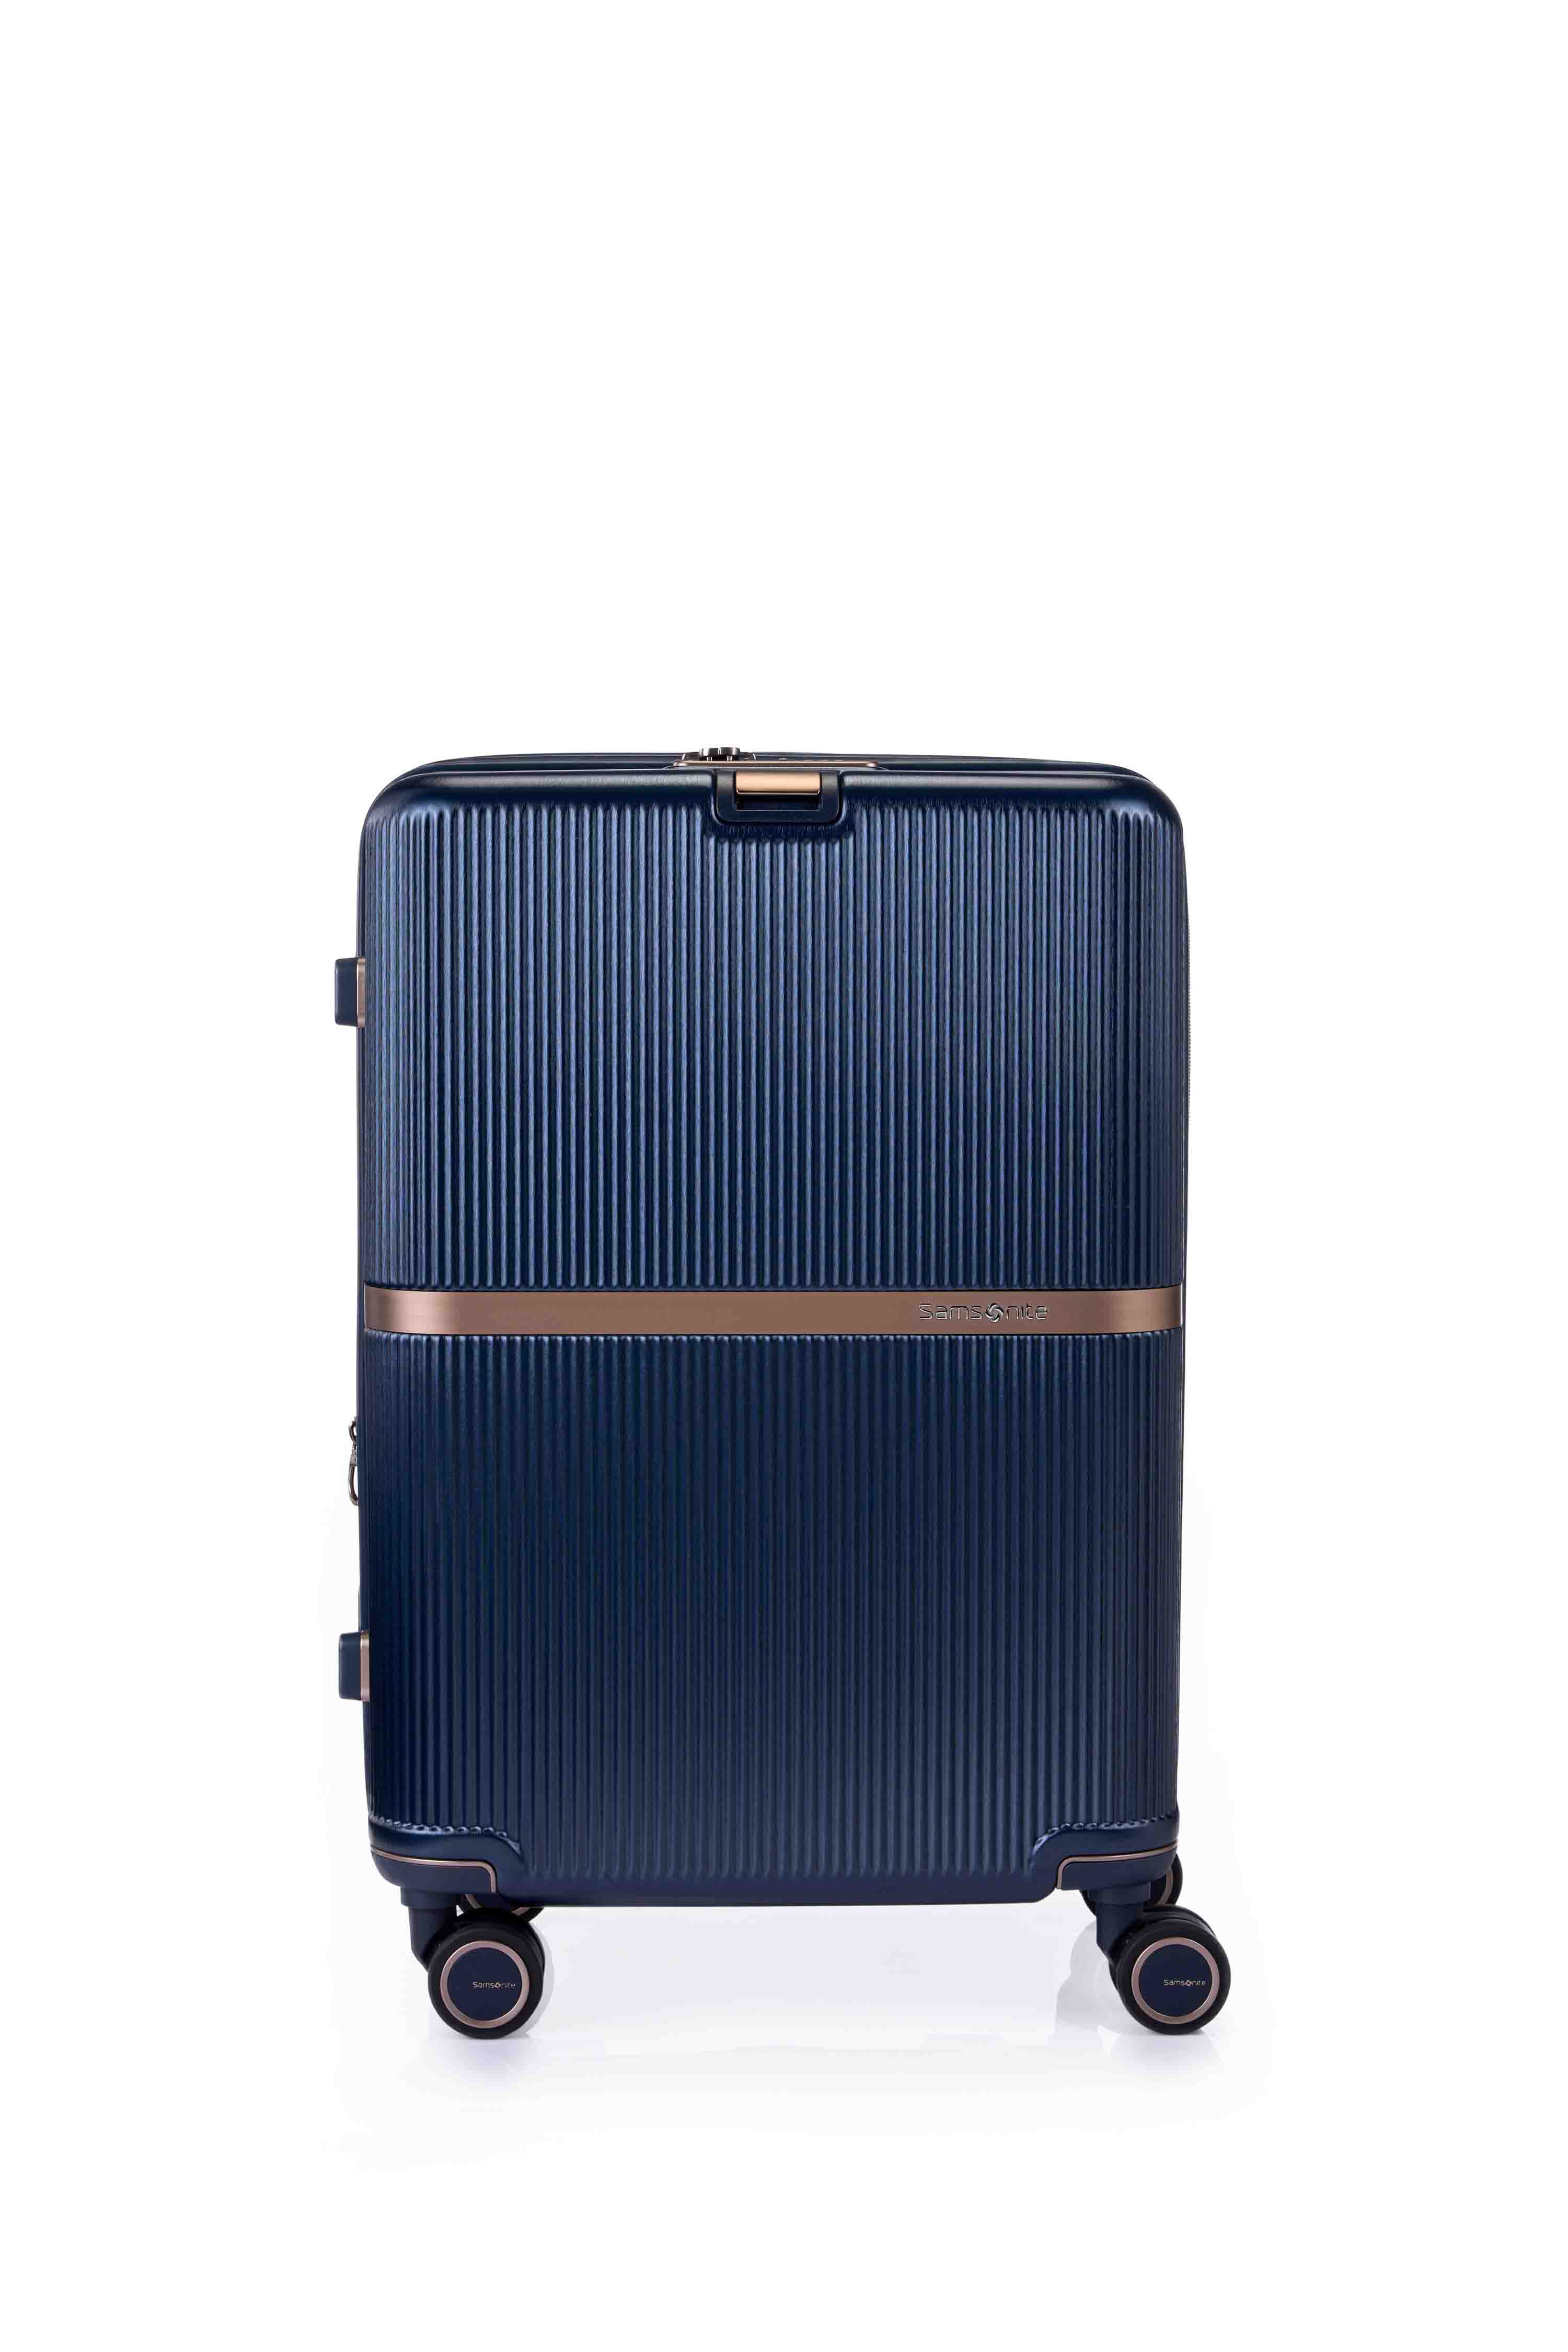 MINTER 行李箱 61厘米/22吋 (可擴充)  size | Samsonite